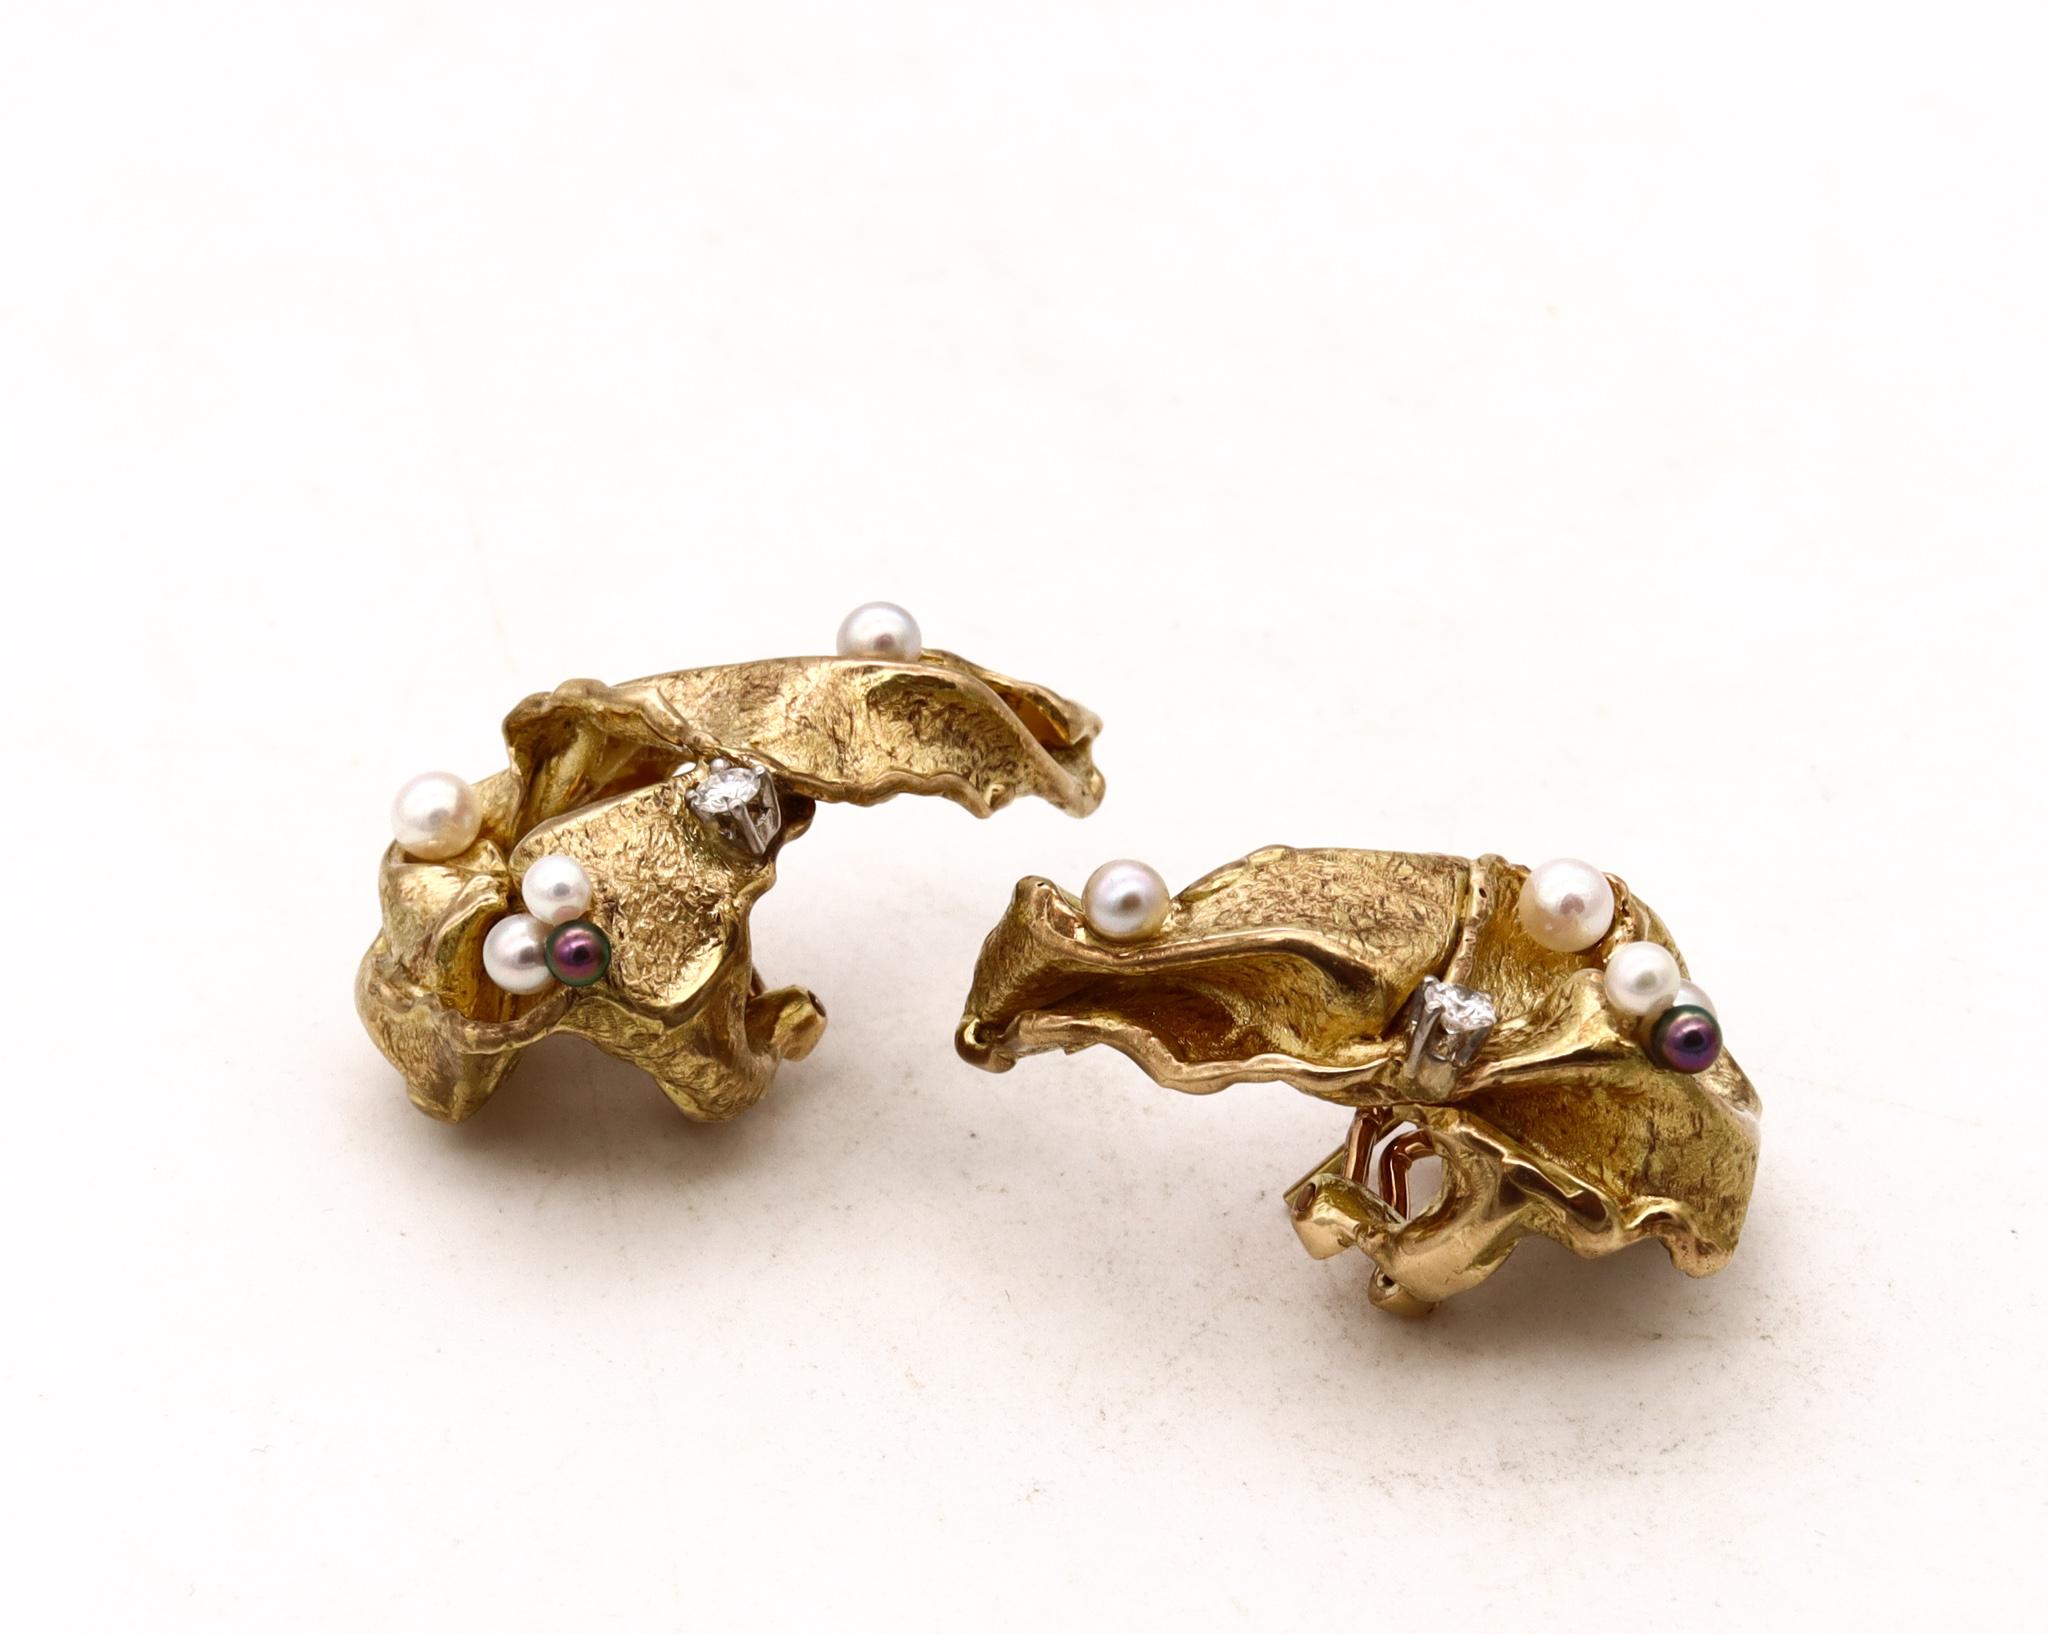 Gilbert Albert 1970 Swiss Modernist Clip Earrings In 18Kt Yellow Gold With Pearl 1